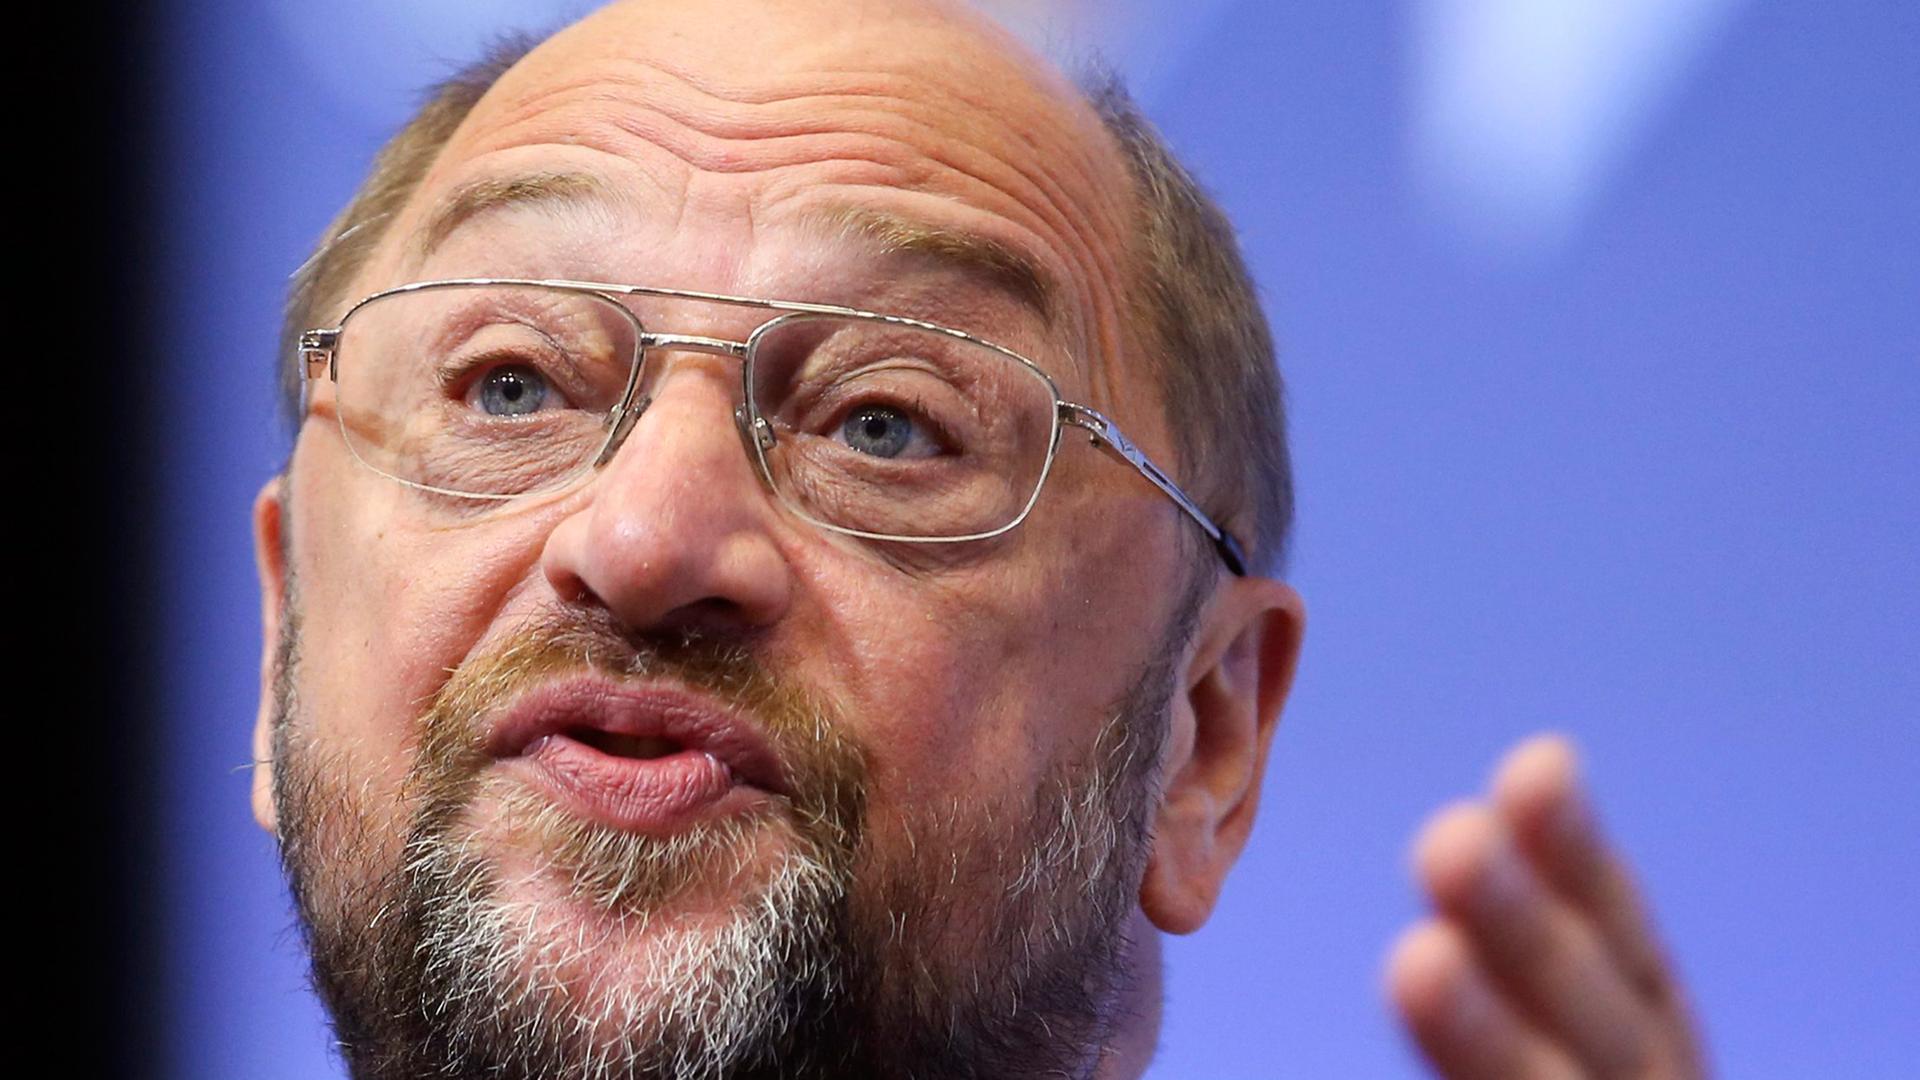 Martin Schulz (SPD), der Präsident des Europäischen Parlaments